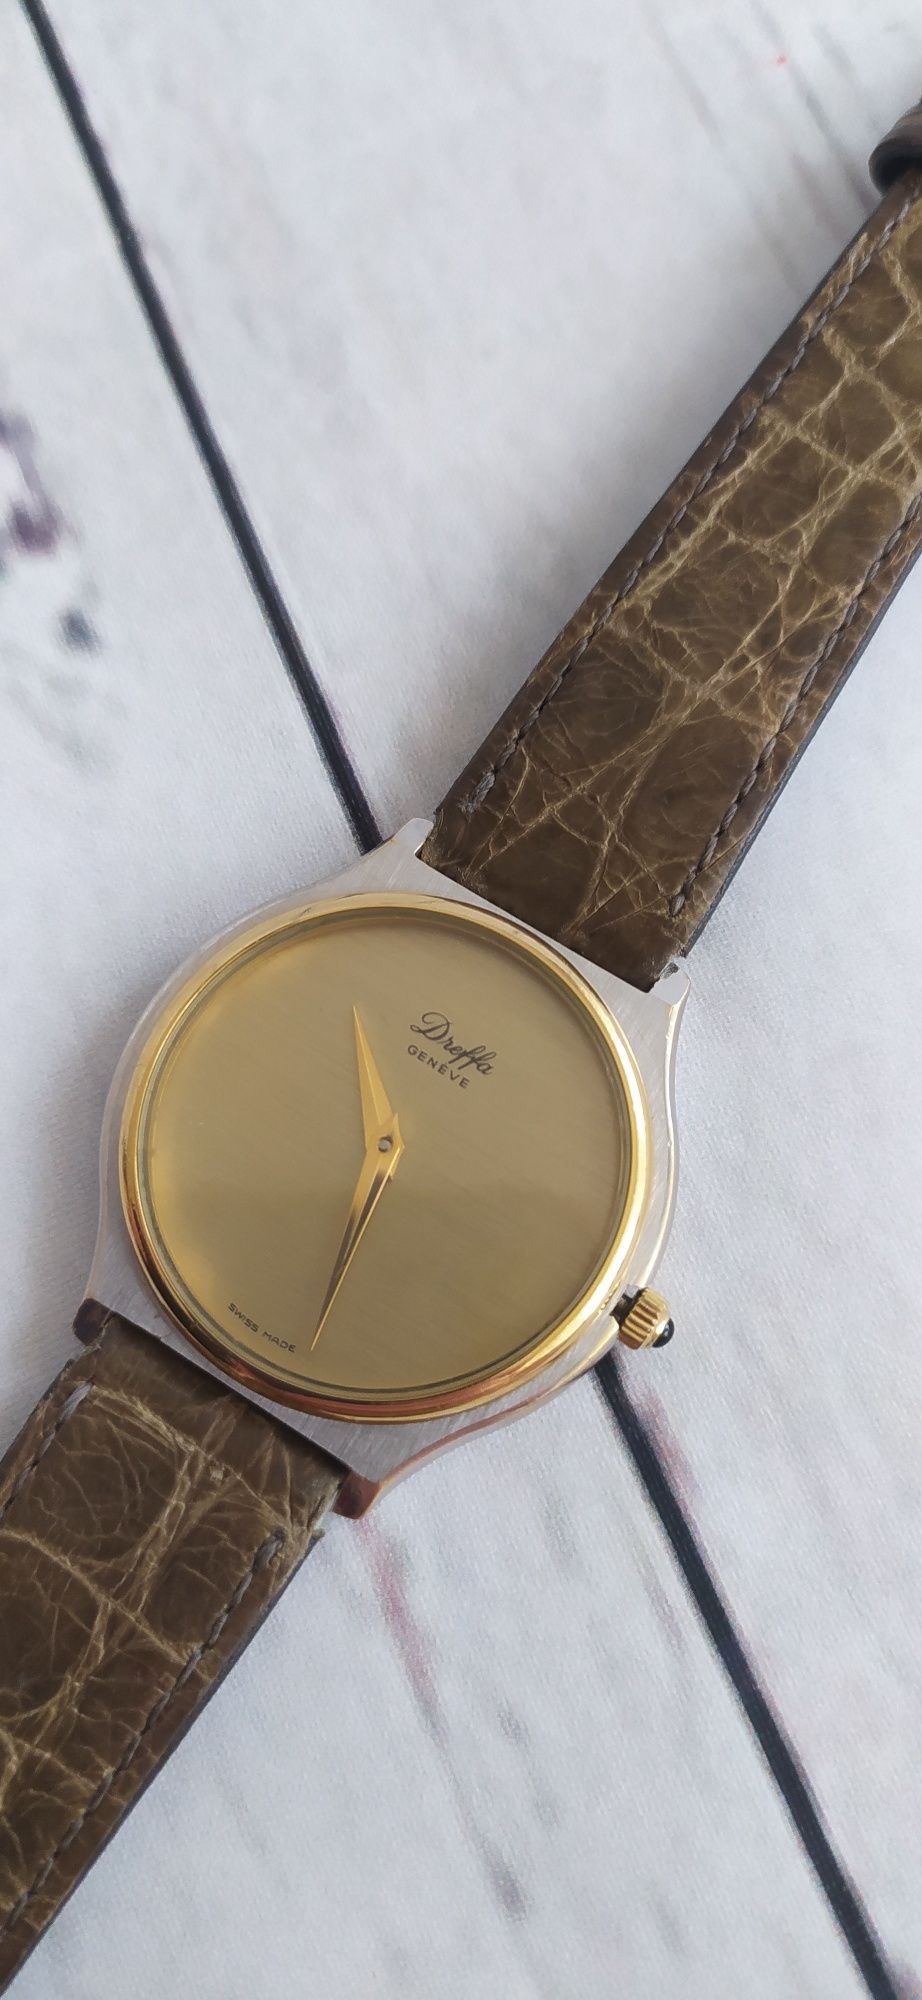 Damski zegarek szwajcarski Dreffa Geneve